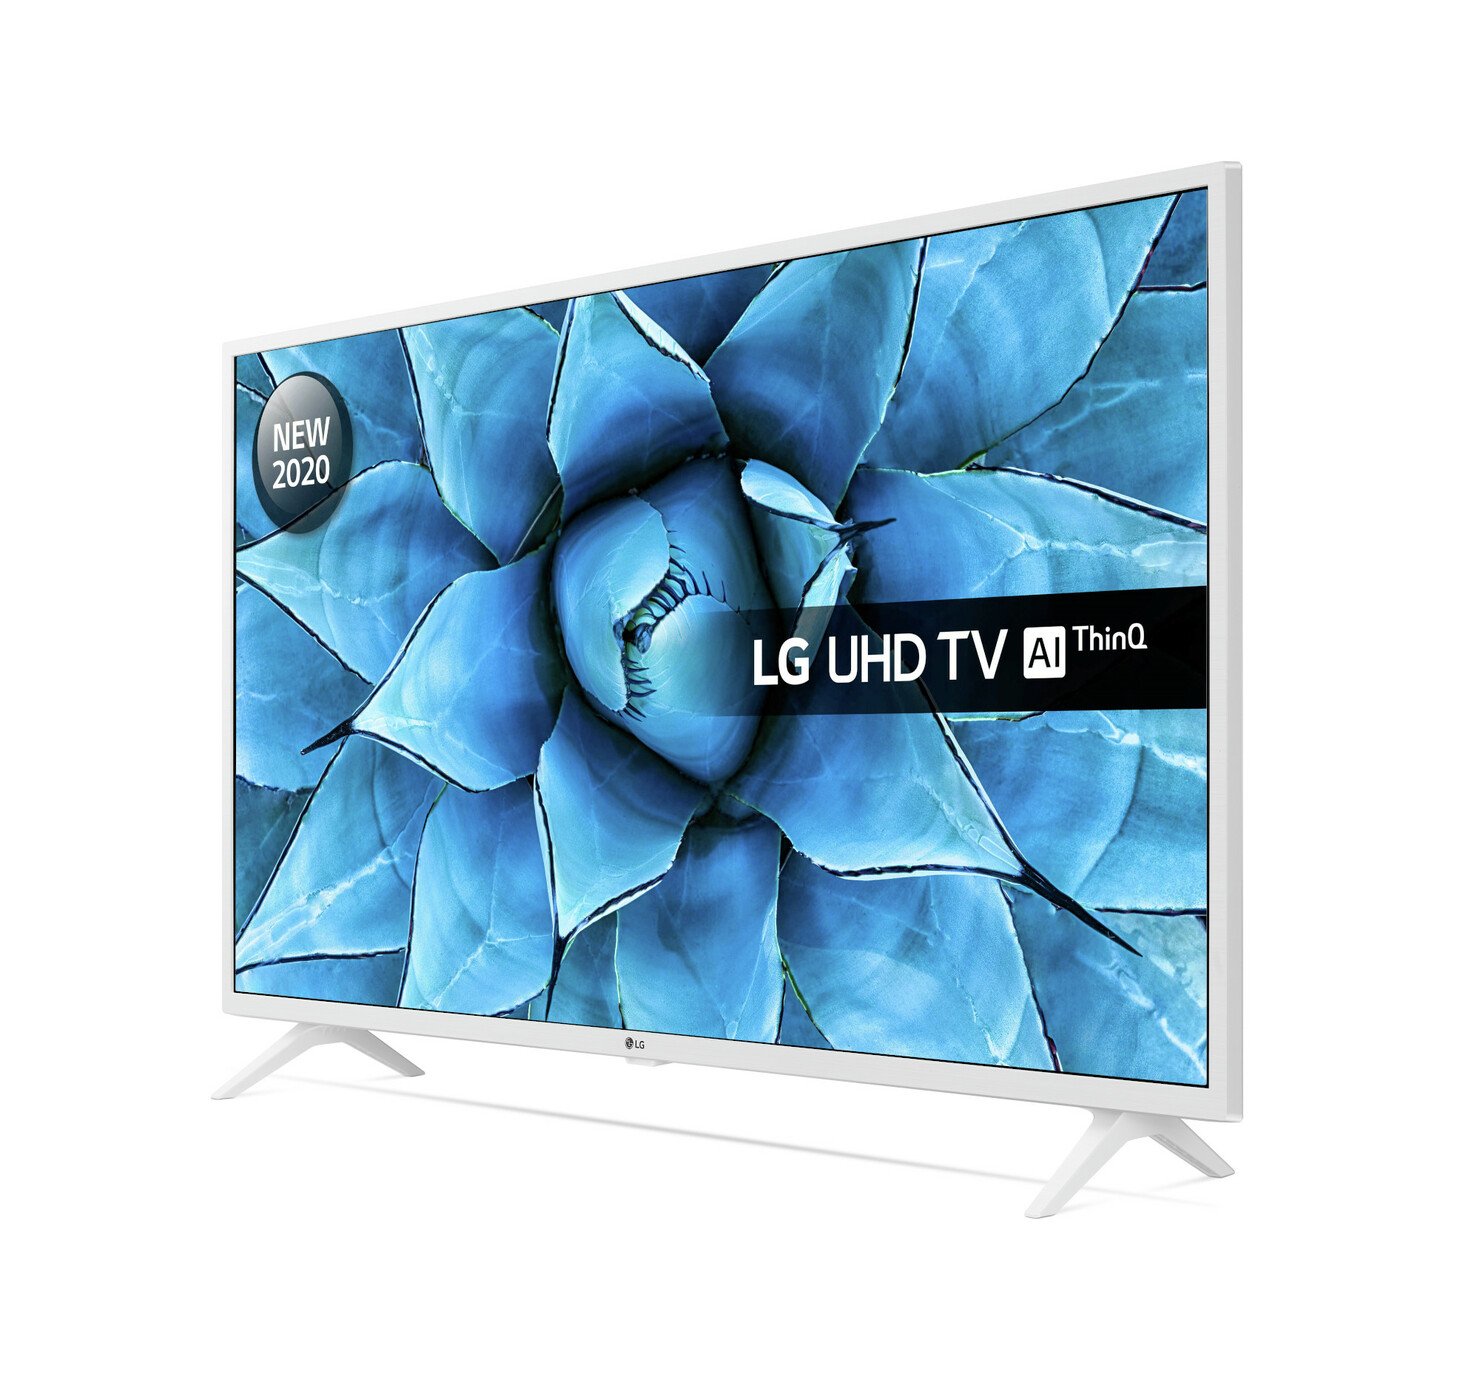 LG 49 Inch 49UN7390 Smart 4K Ultra HD LED TV Review